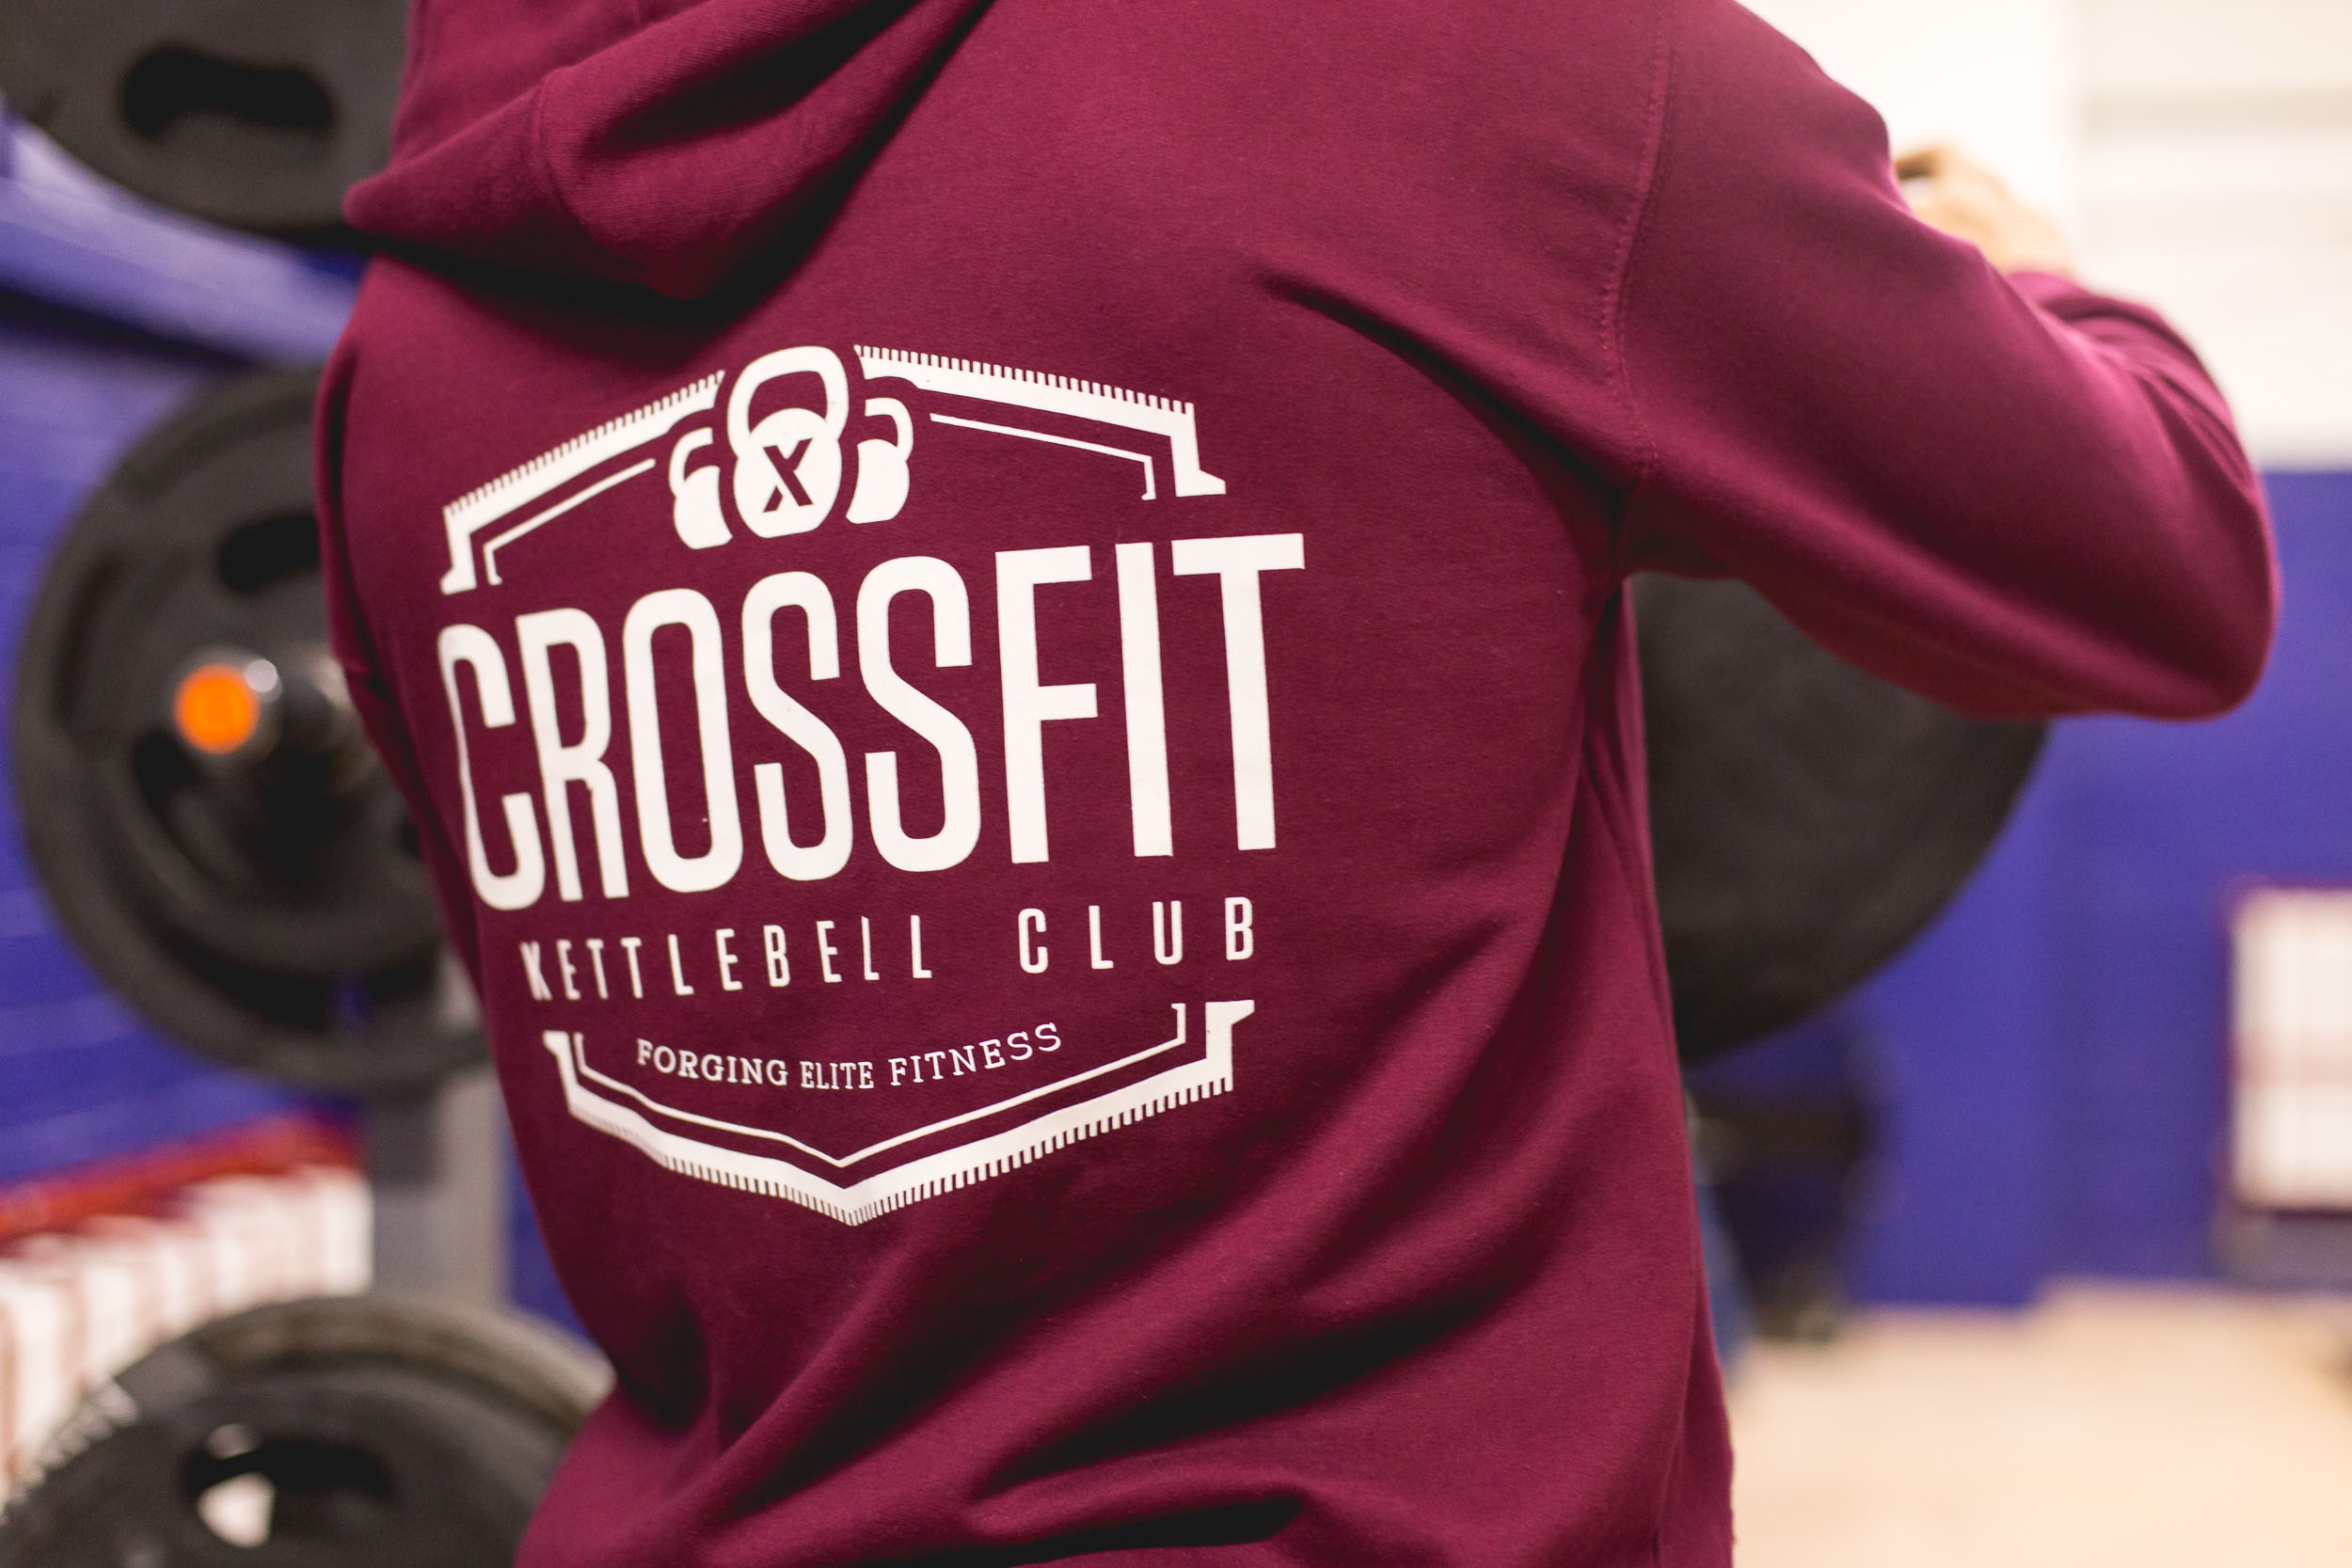 Crossfit UK printed clothing t-shirts-9980.jpg